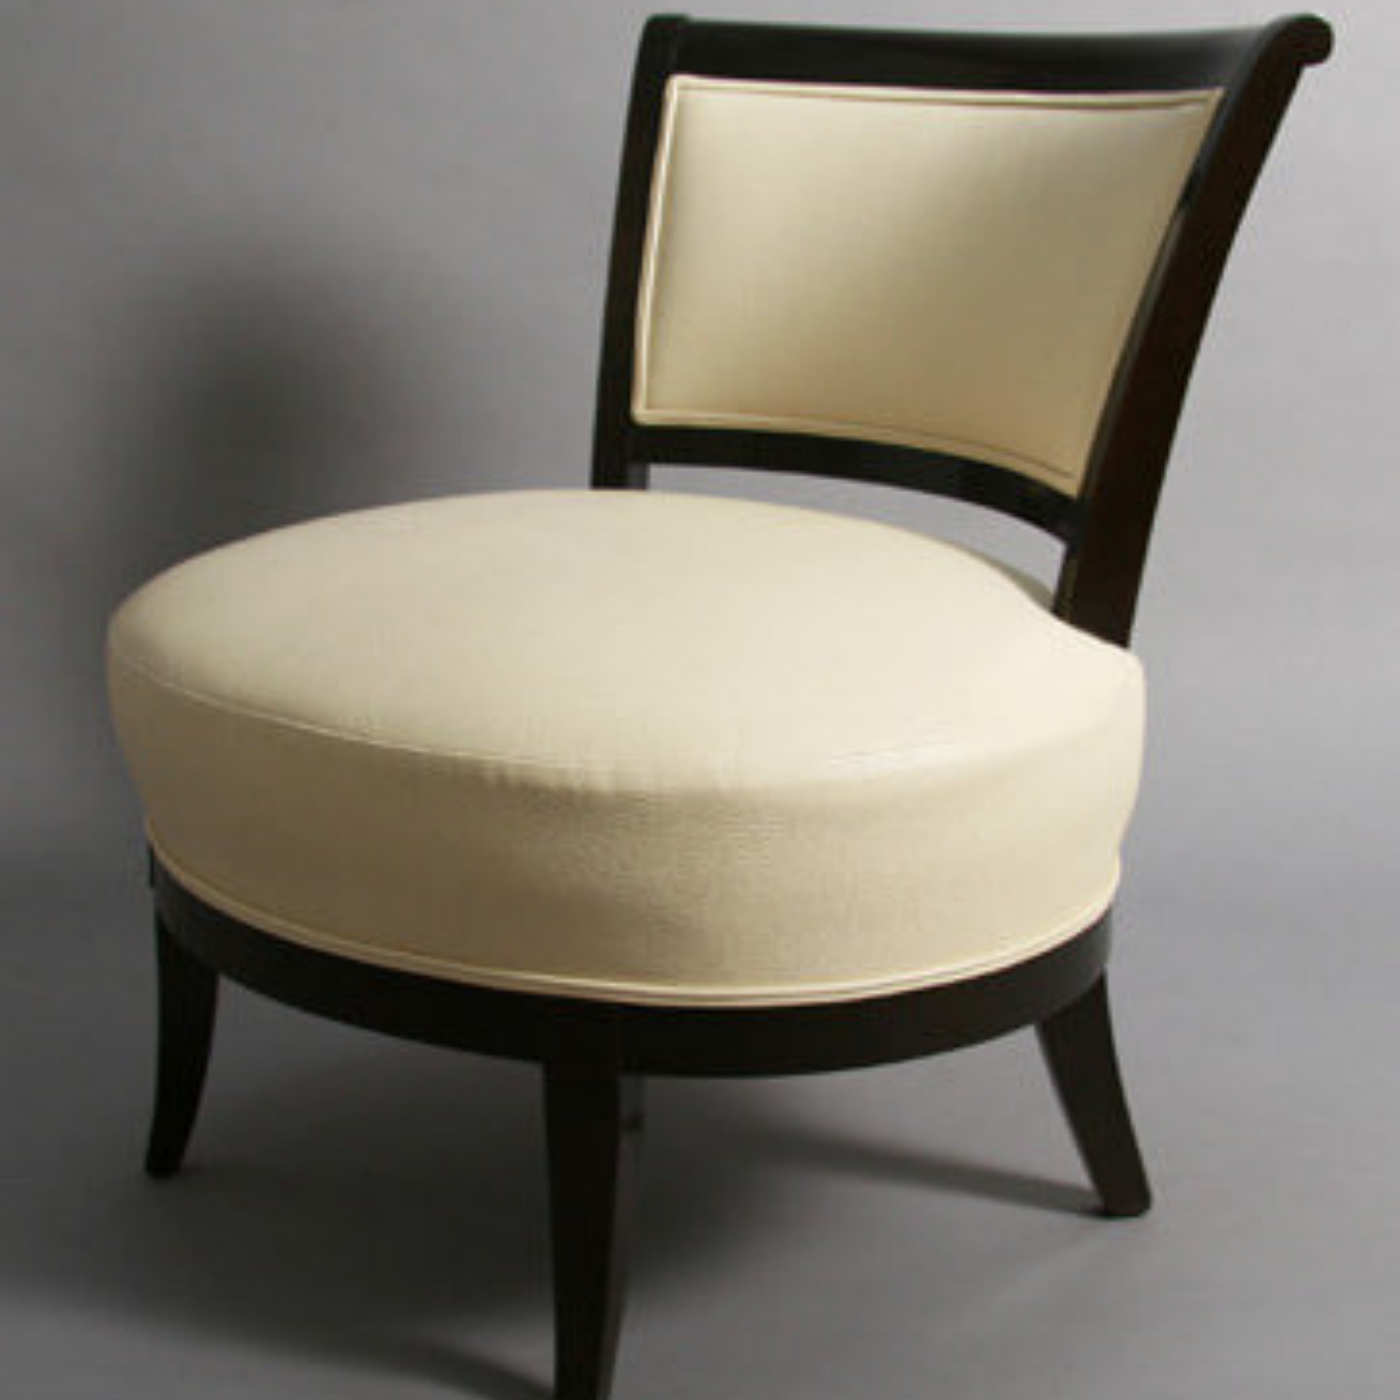 The Vera Slipper Chair